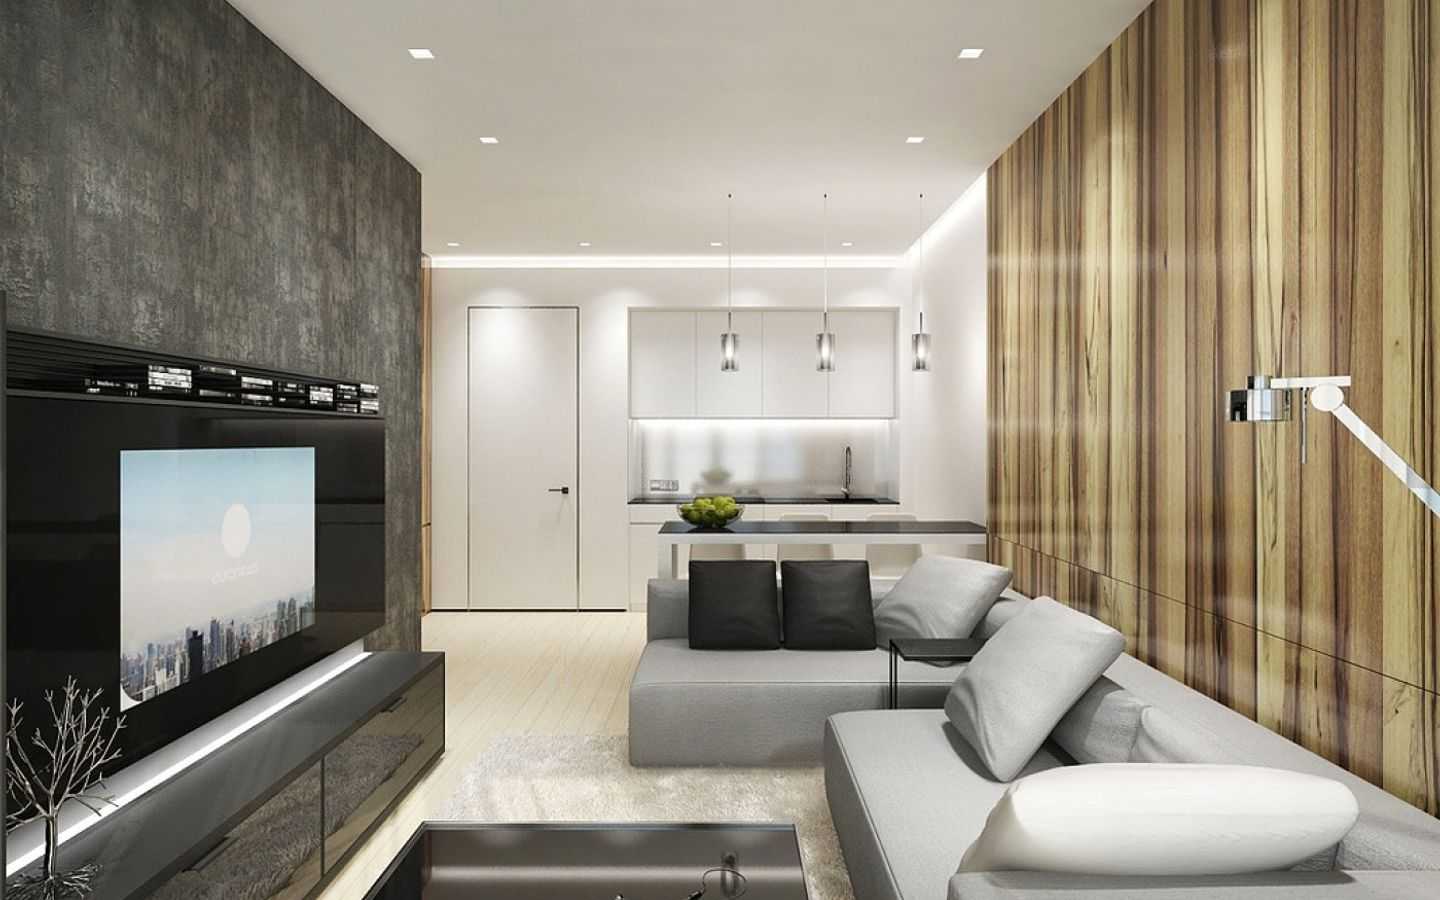 Дизайн квартиры 60 м кв. варианты стилей интерьера для двухкомнатной квартиры 60 кв м. | идеи дизайна интерьера